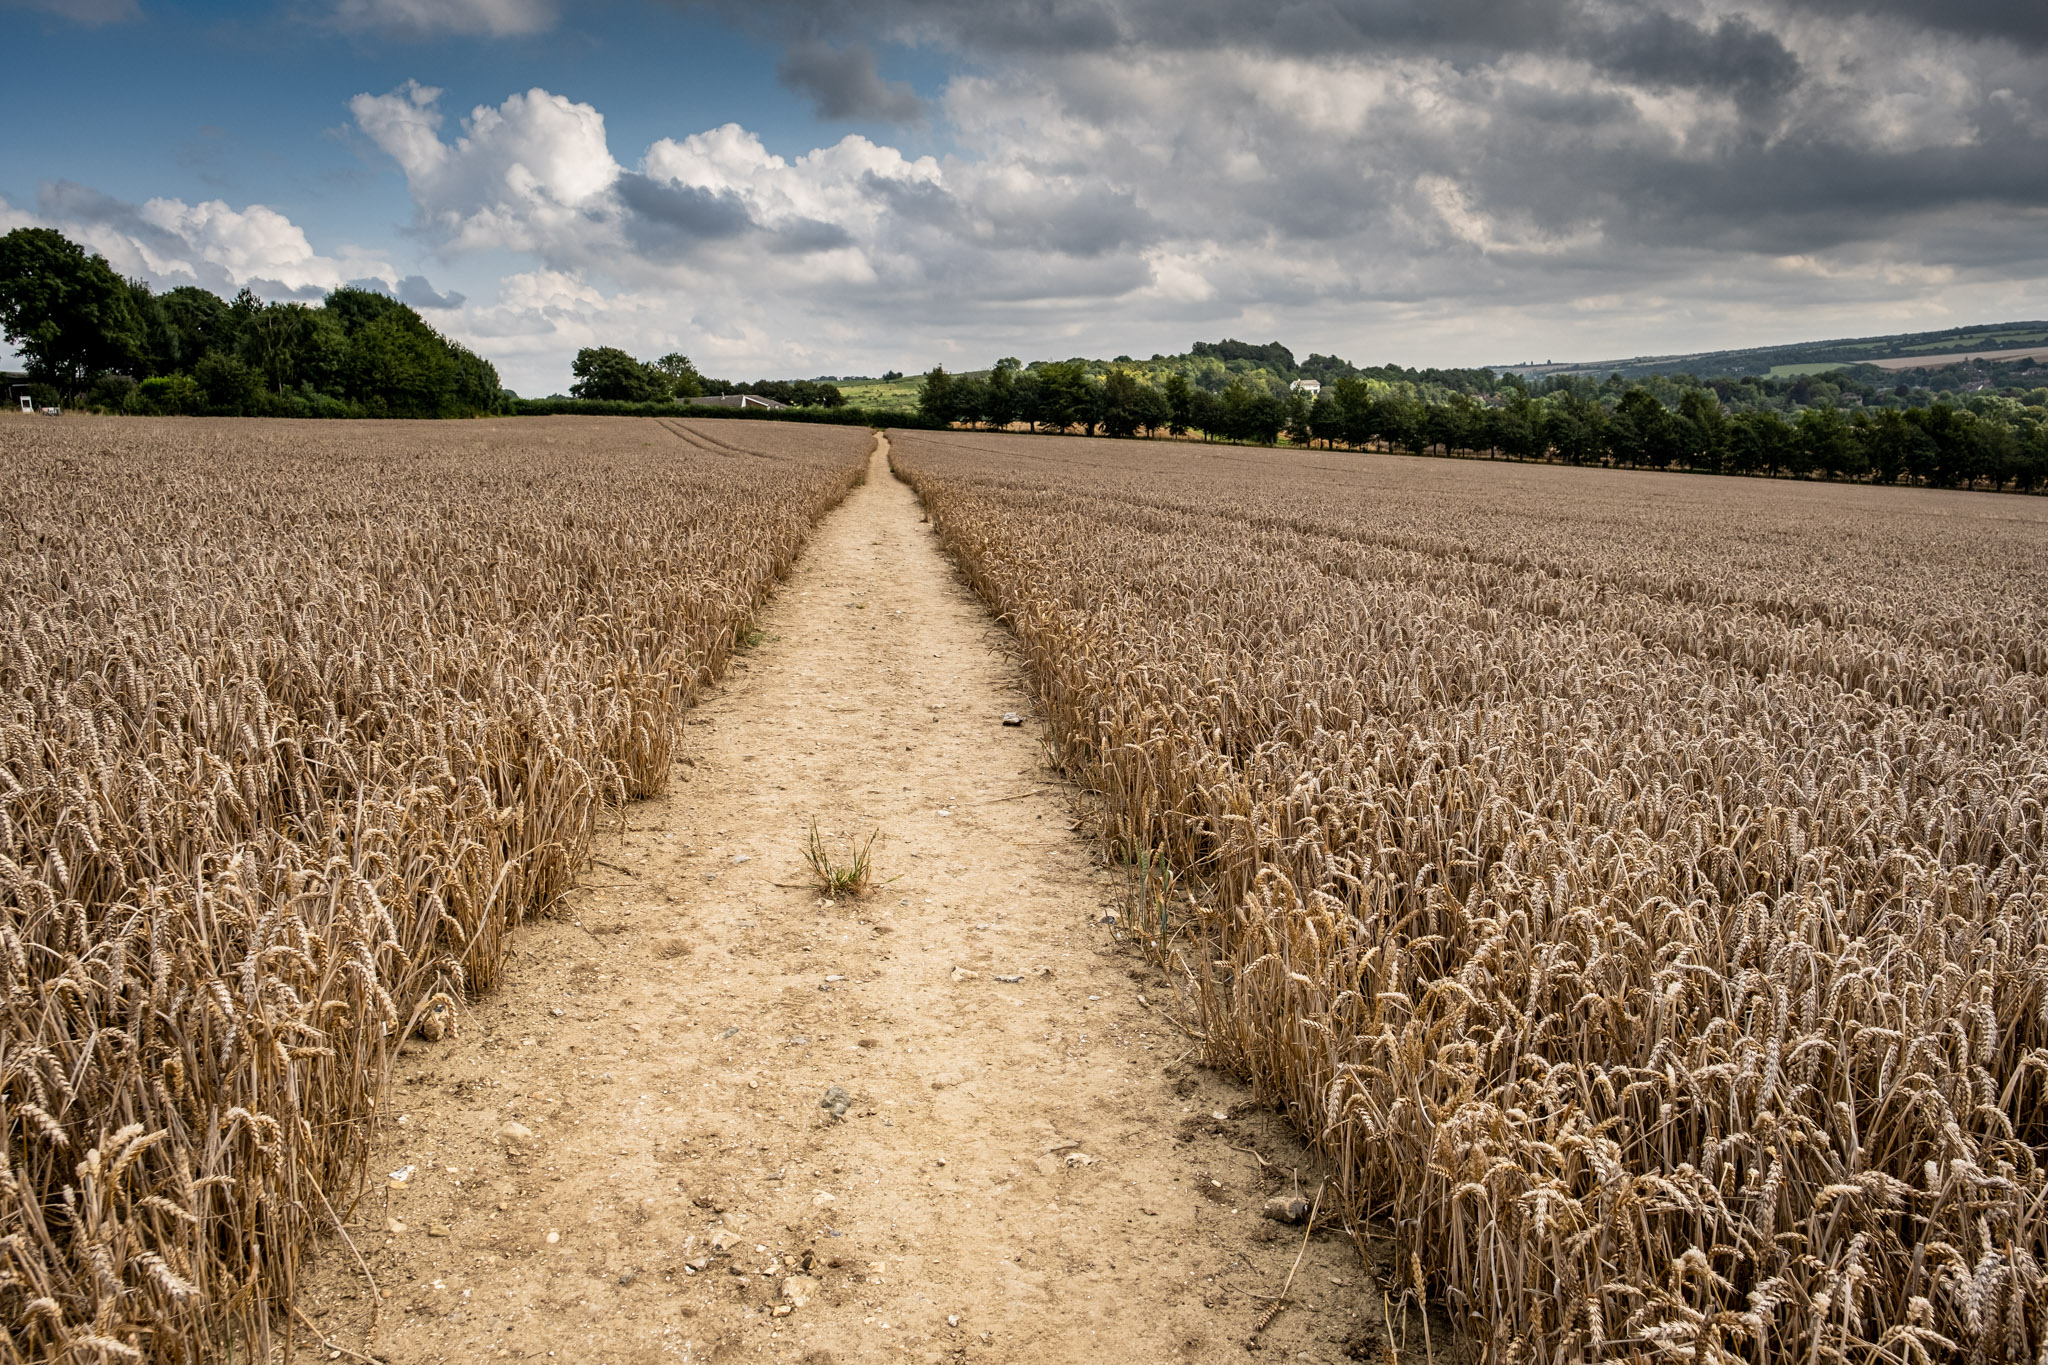 Mowed path through golden coloured wheat field